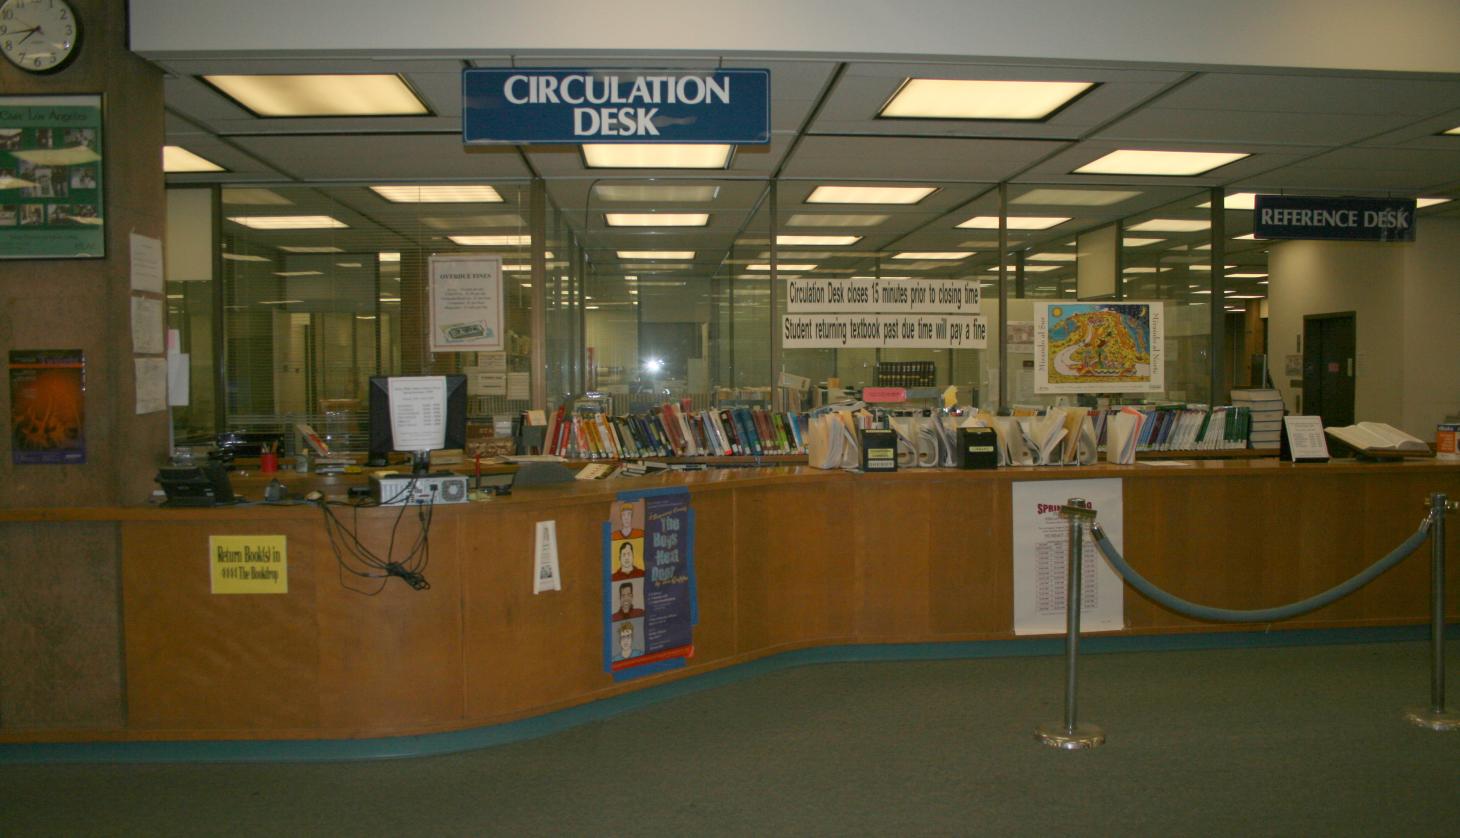 Circulation Desk